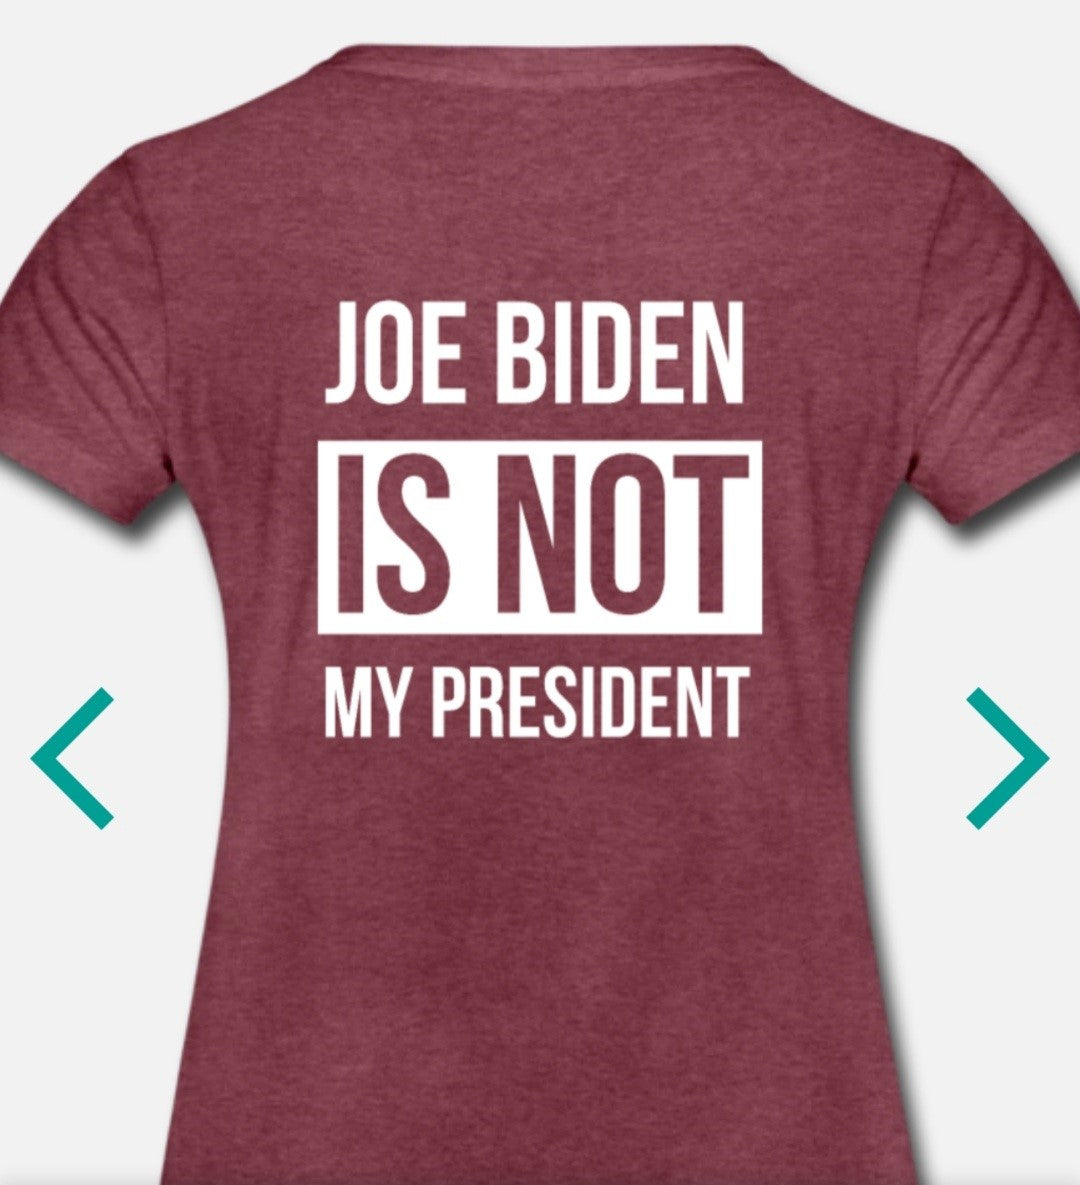 Joe Biden Is Not My President Tee Short-Sleeve Unisex T-Shirt